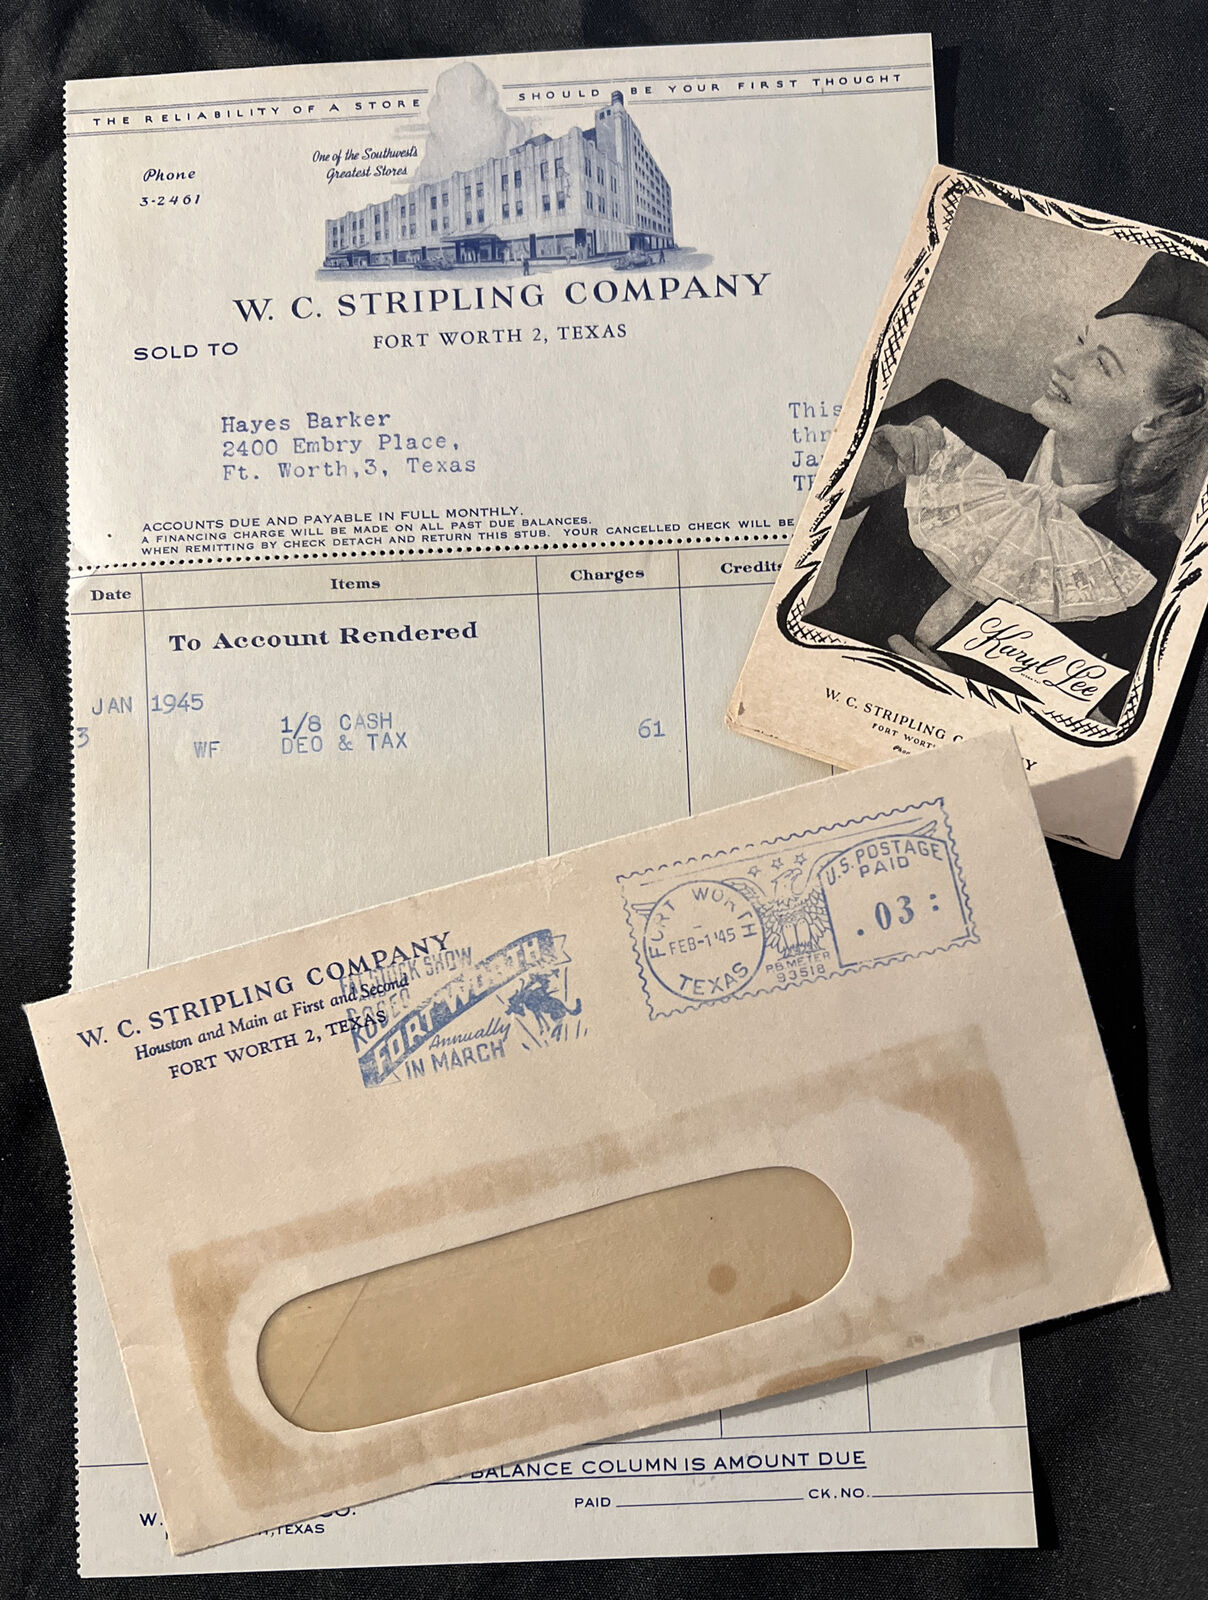 Vtg 1945 FT WORTH Texas W.C. STRIPLING Company Invoice / Envelope / Brochure